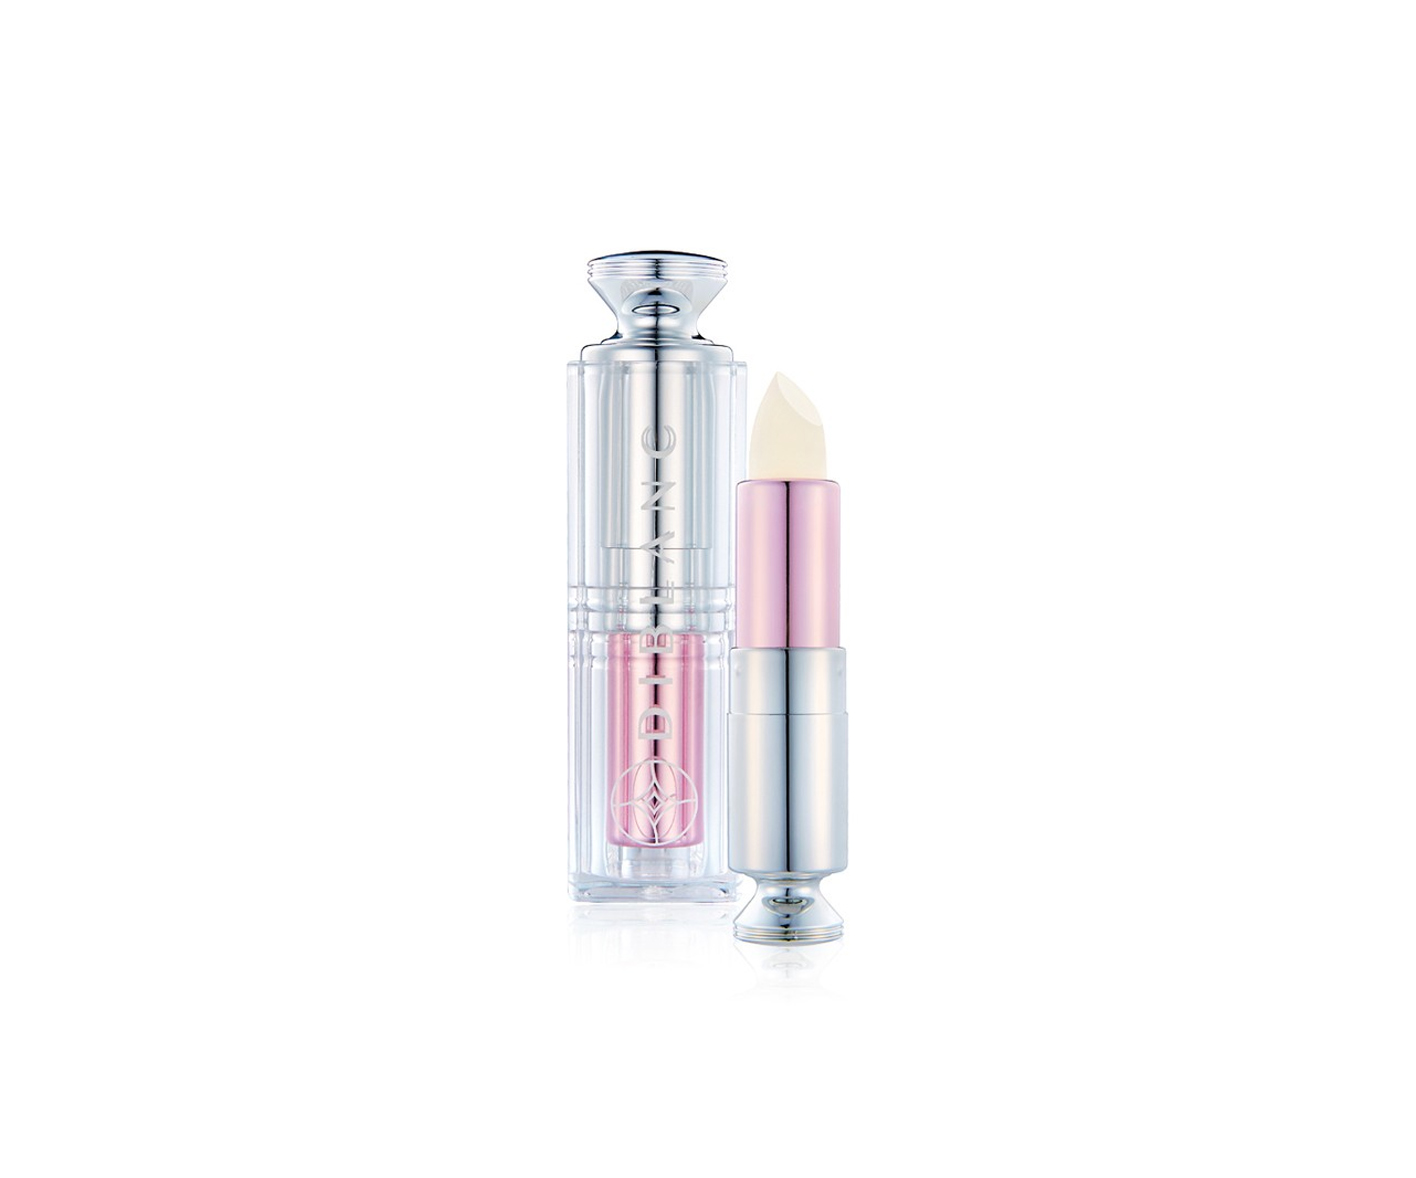 Diblanc, a colour-changing lipstick